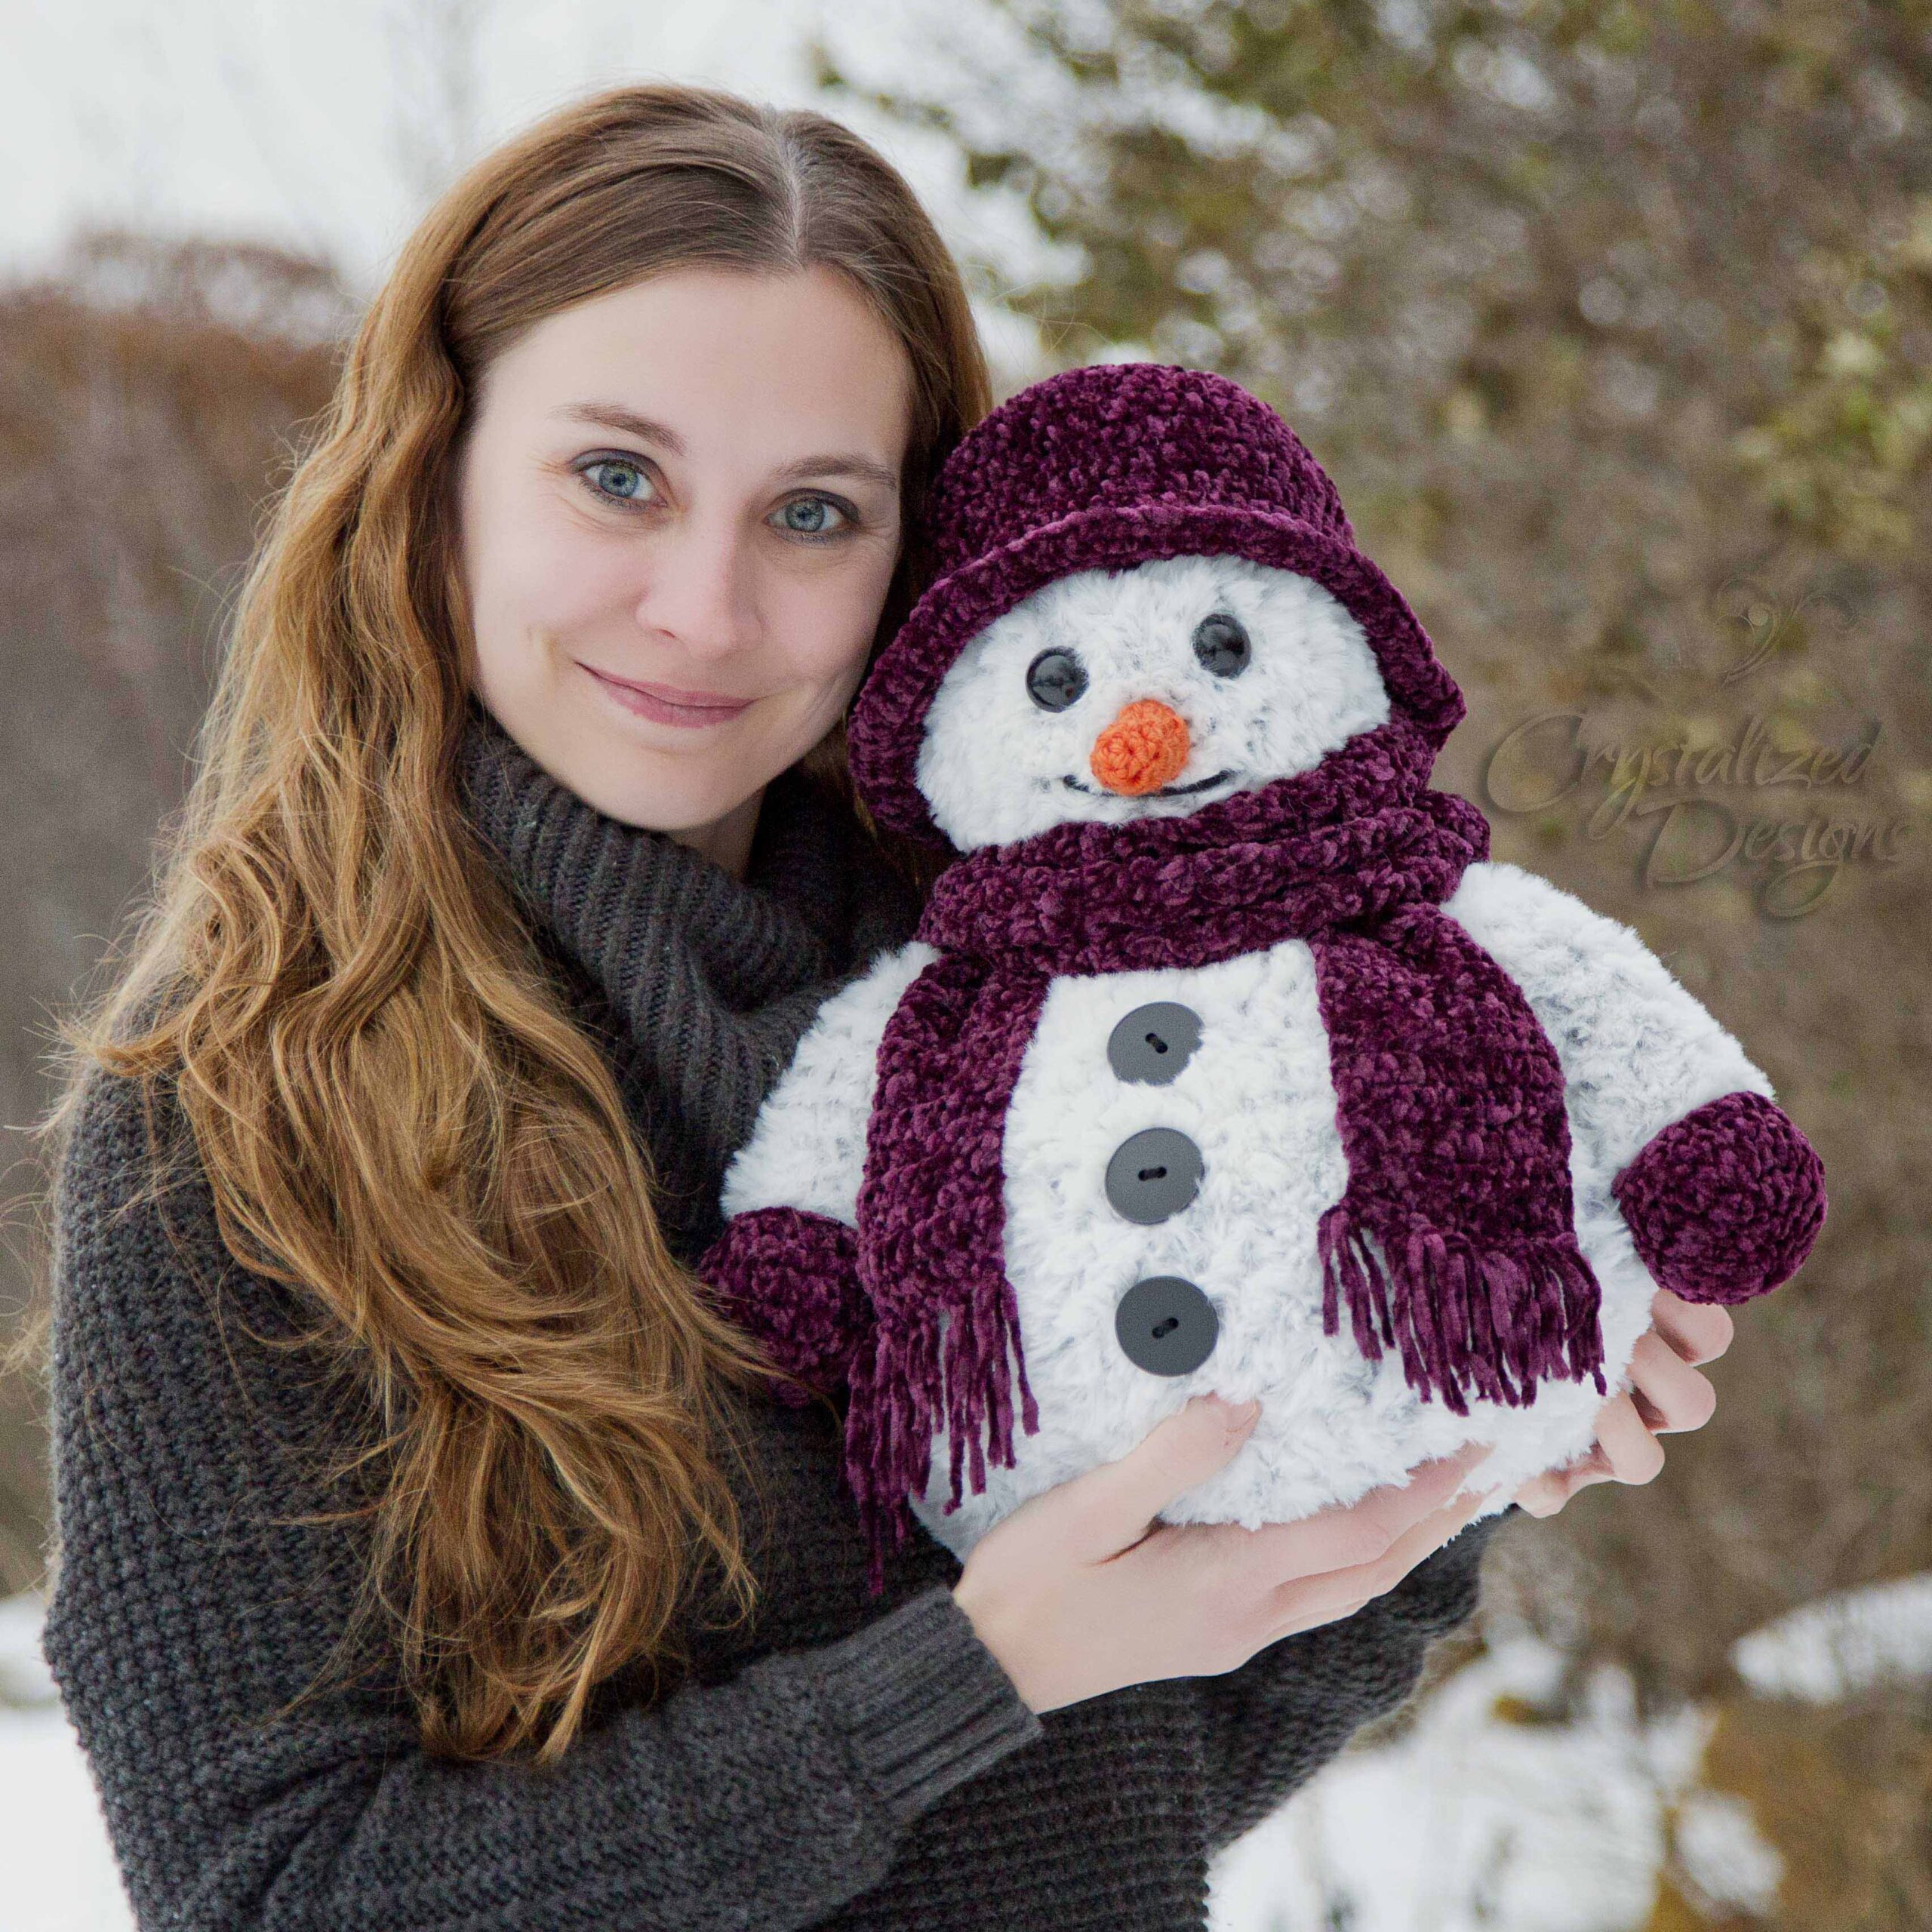 Crispen the Snowman Free Crochet Pattern by Crystalized Designs